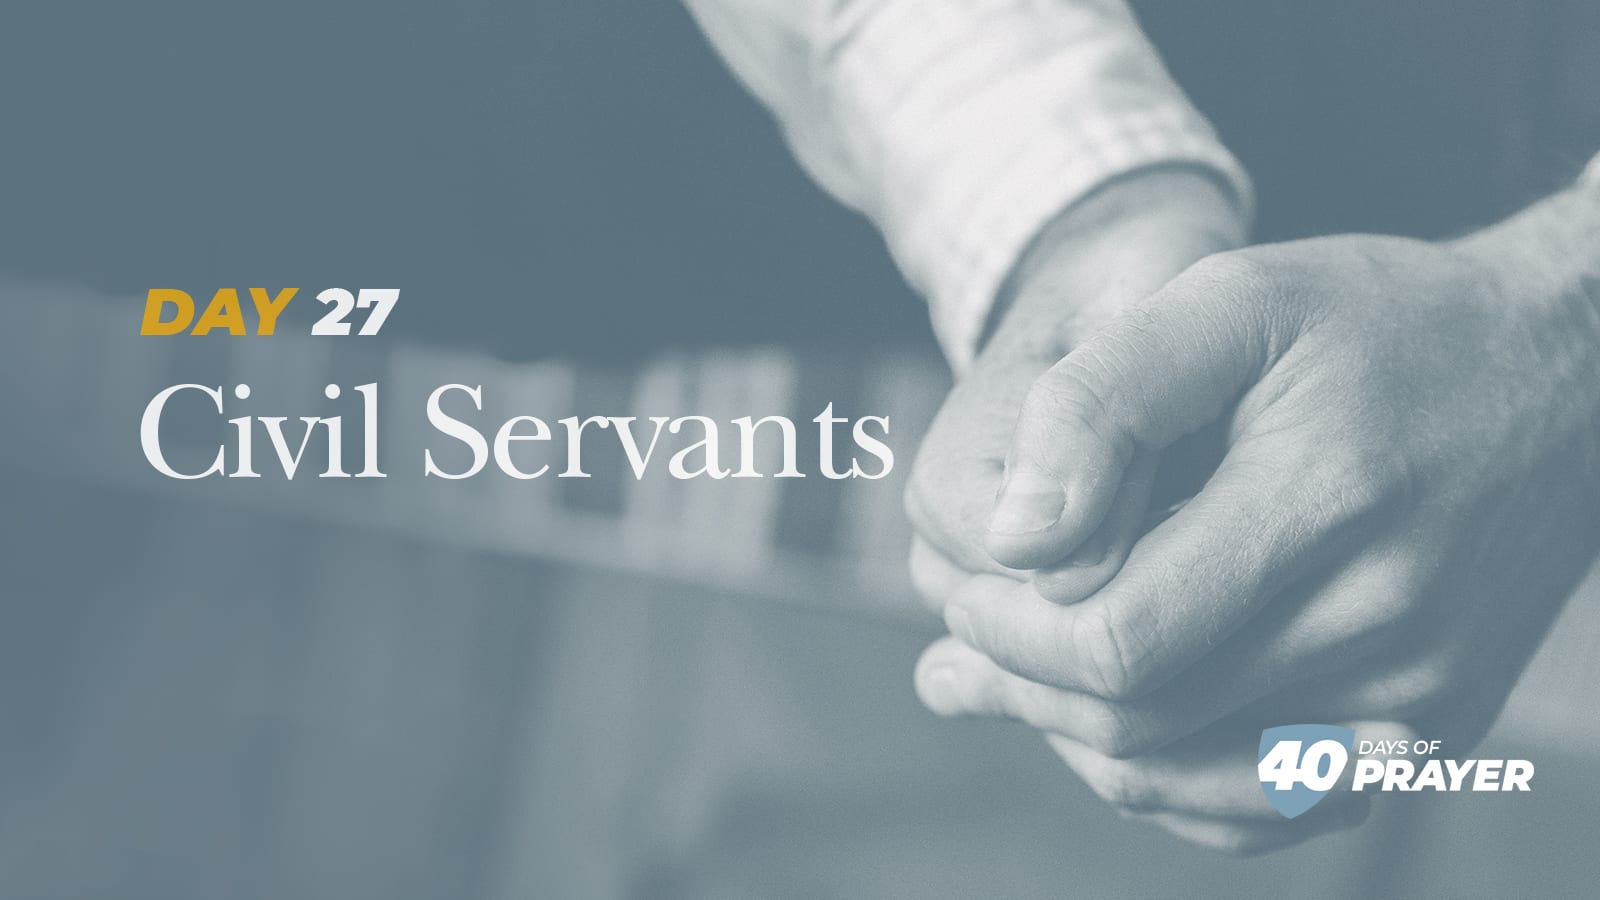 40 days of Prayer Day 27: Civil Servants